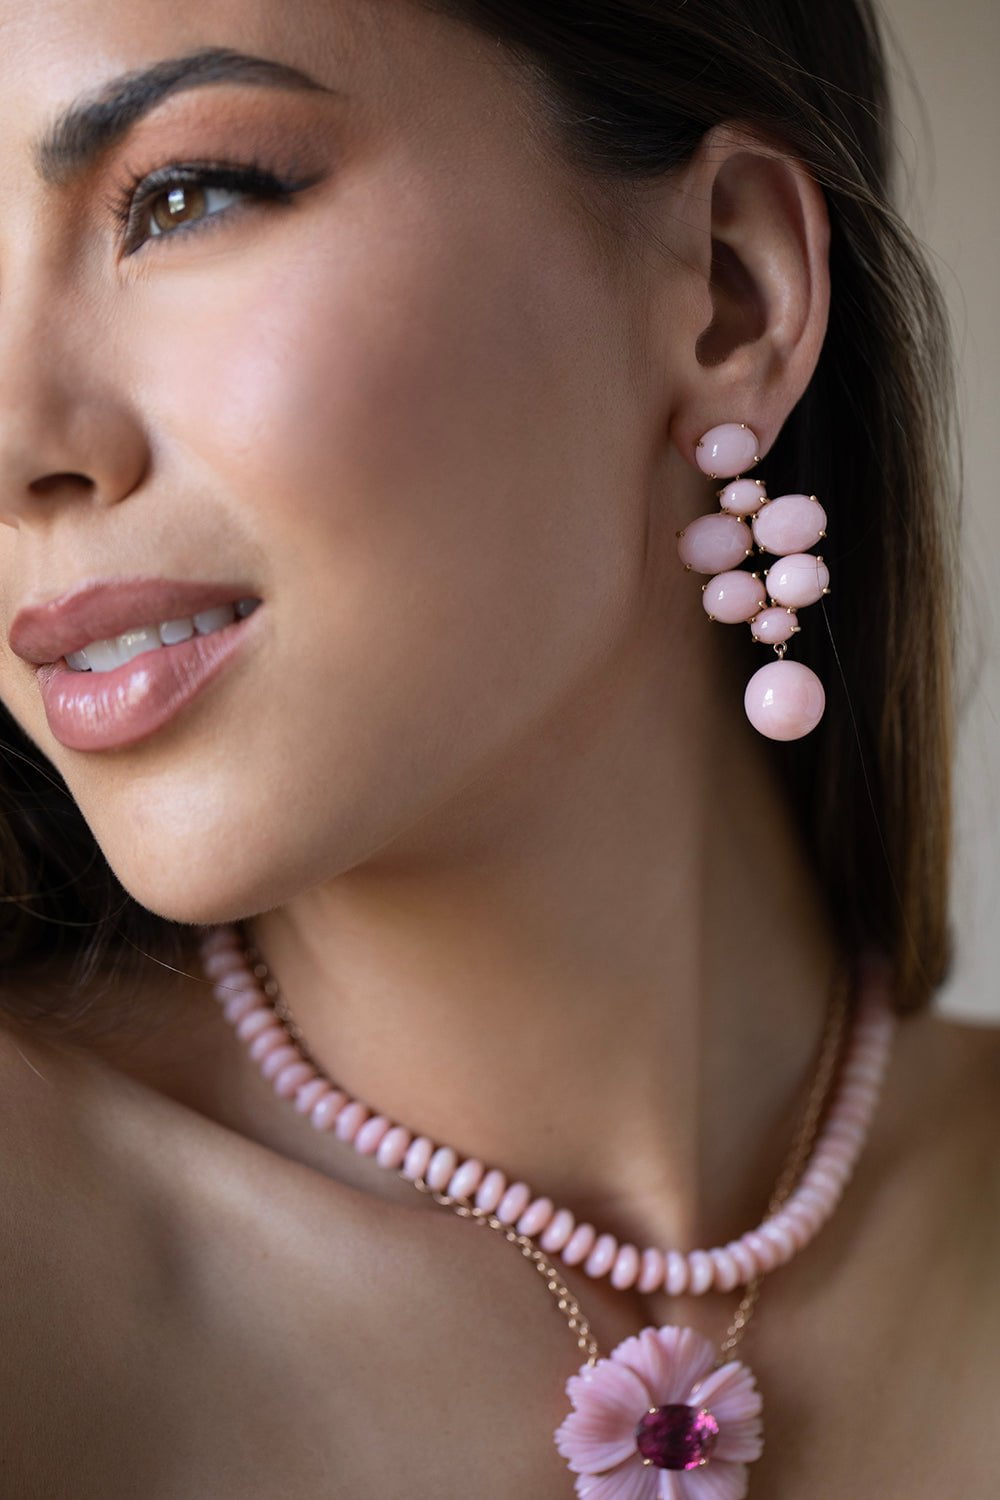 Pink Opal Gumball Drop Earrings JEWELRYFINE JEWELEARRING IRENE NEUWIRTH JEWELRY   